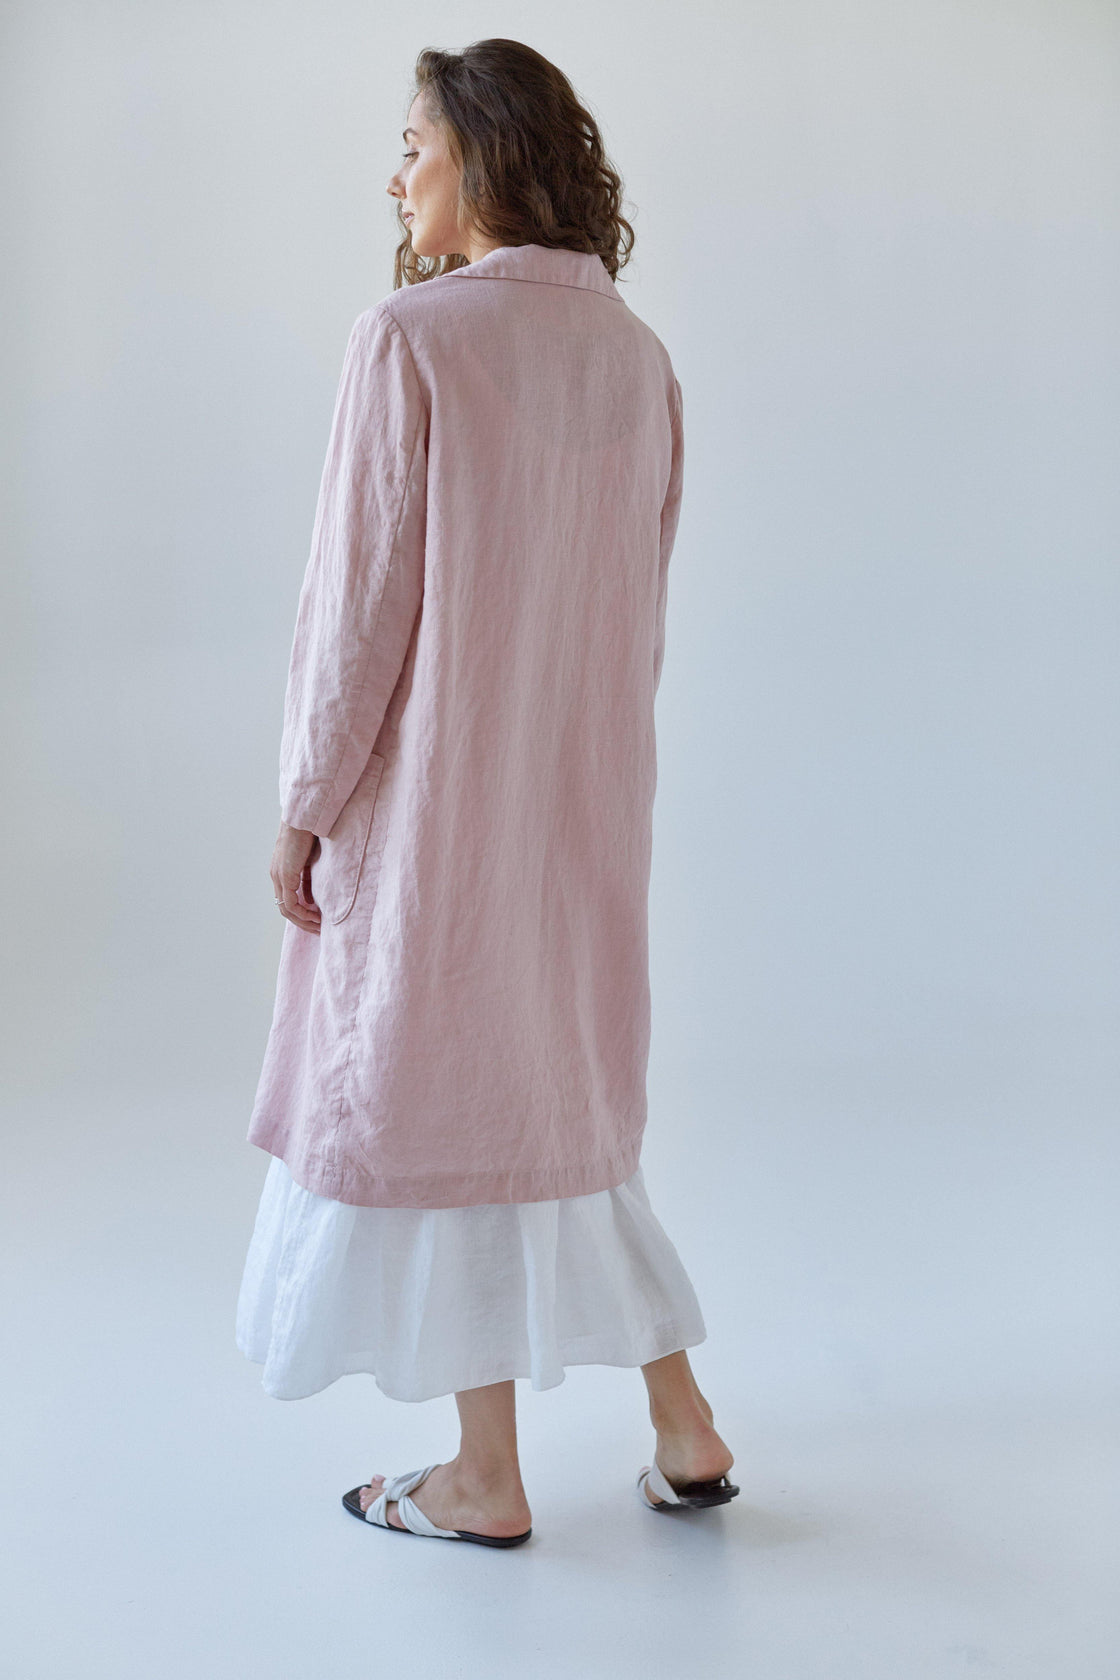 Women's linen trench coat white dress - Manufacture de Lin